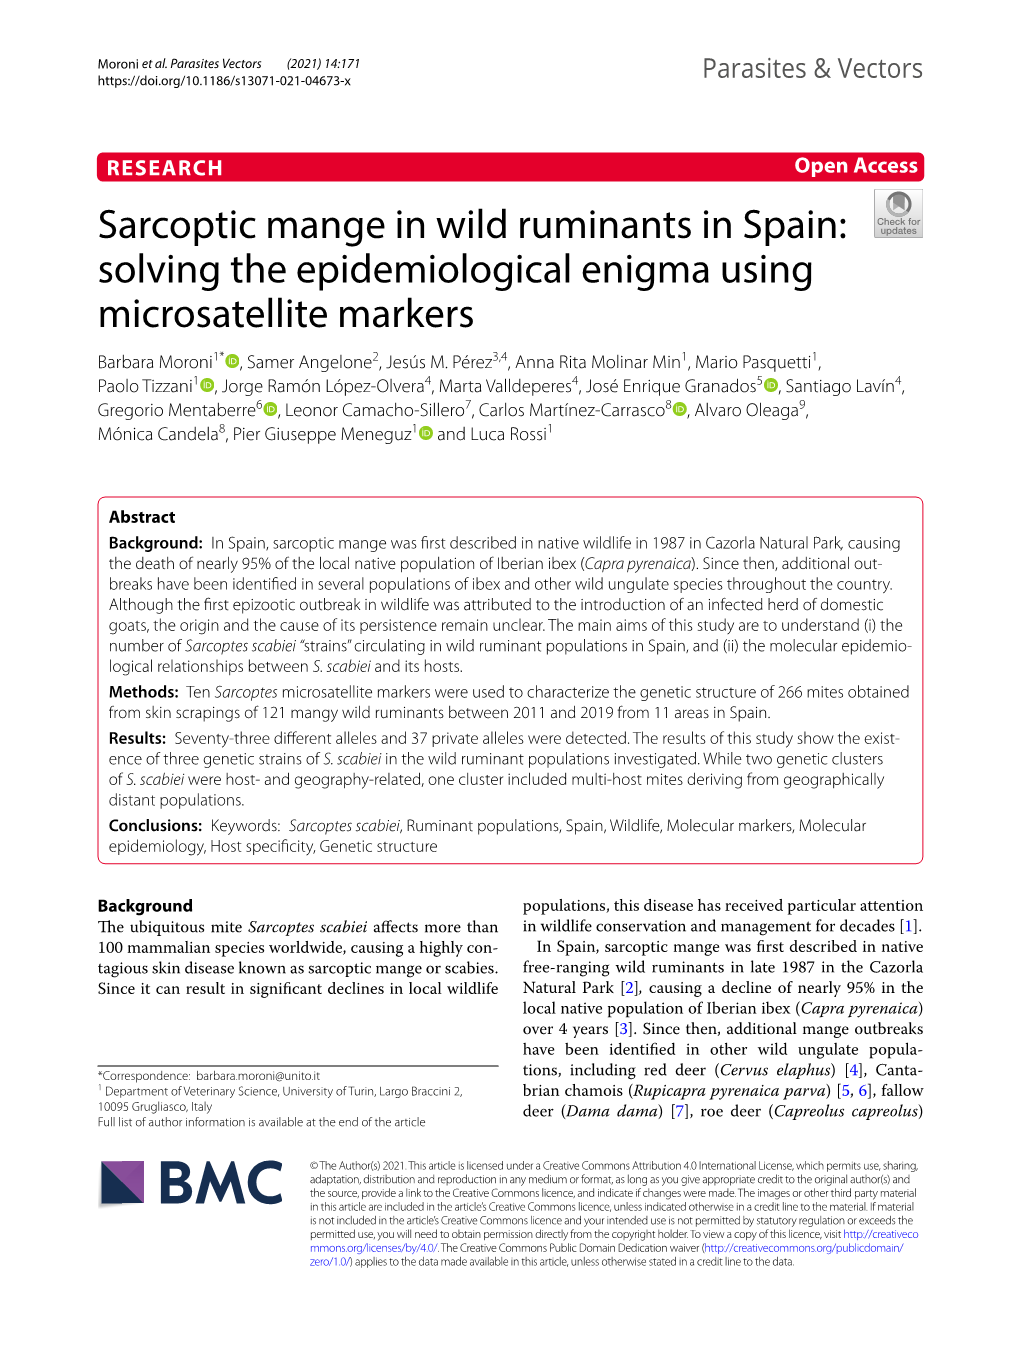 Sarcoptic Mange in Wild Ruminants in Spain: Solving the Epidemiological Enigma Using Microsatellite Markers Barbara Moroni1* , Samer Angelone2, Jesús M